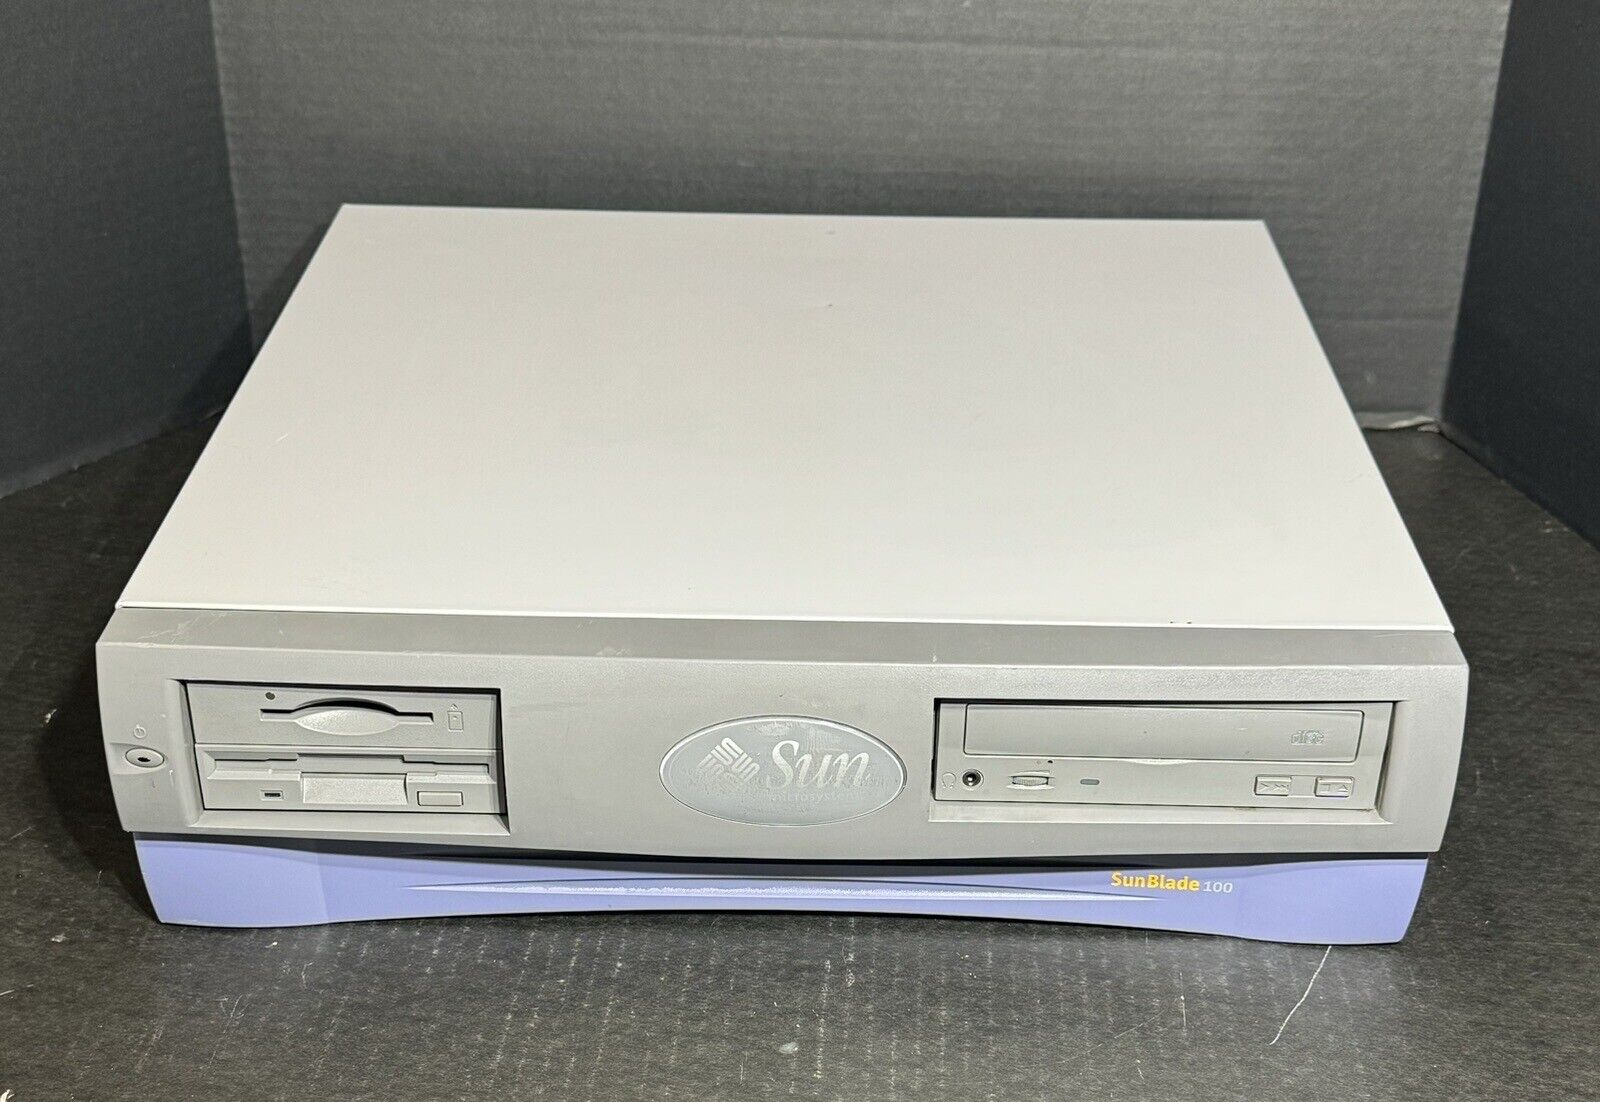 Sun Blade 100 Workstation 500MHz UltraSPARC IIe CPU, 256MB Mem, CD-ROM, Tested